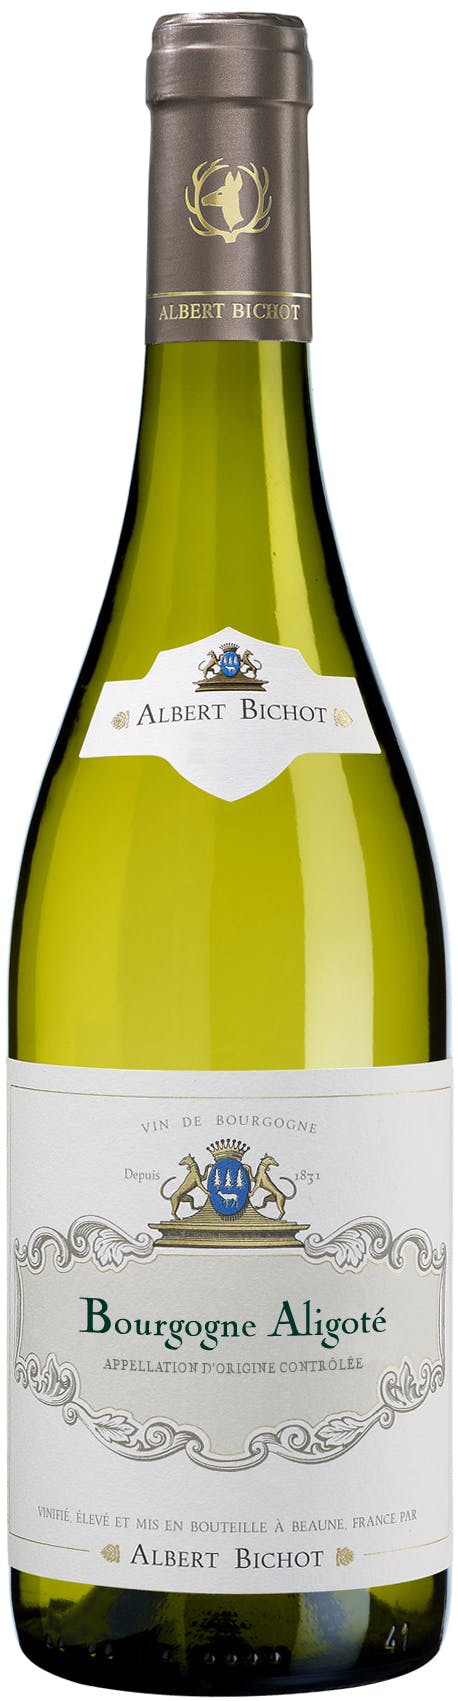 Albert Bichot Bourgogne Aligote 2020 750ml - Buster's Liquors & Wines